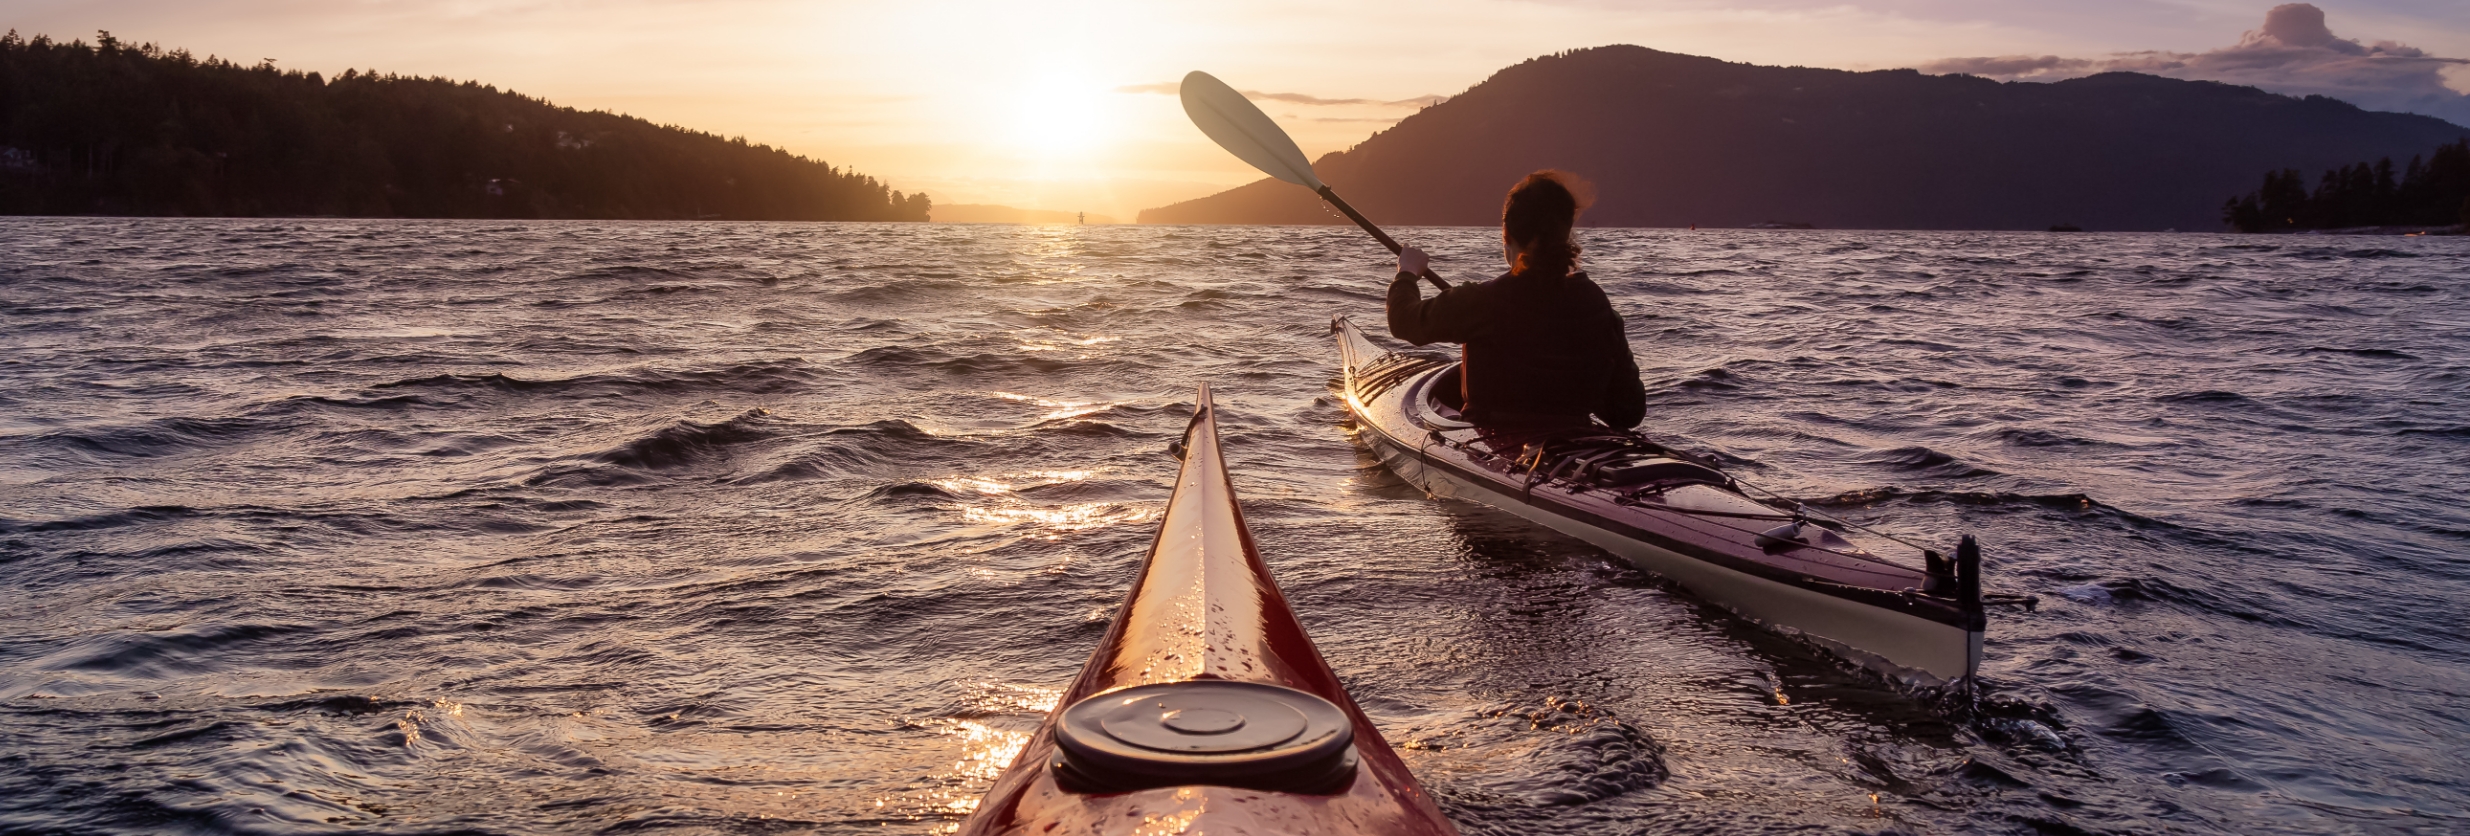 2 people kayaking in the ocean at sunset